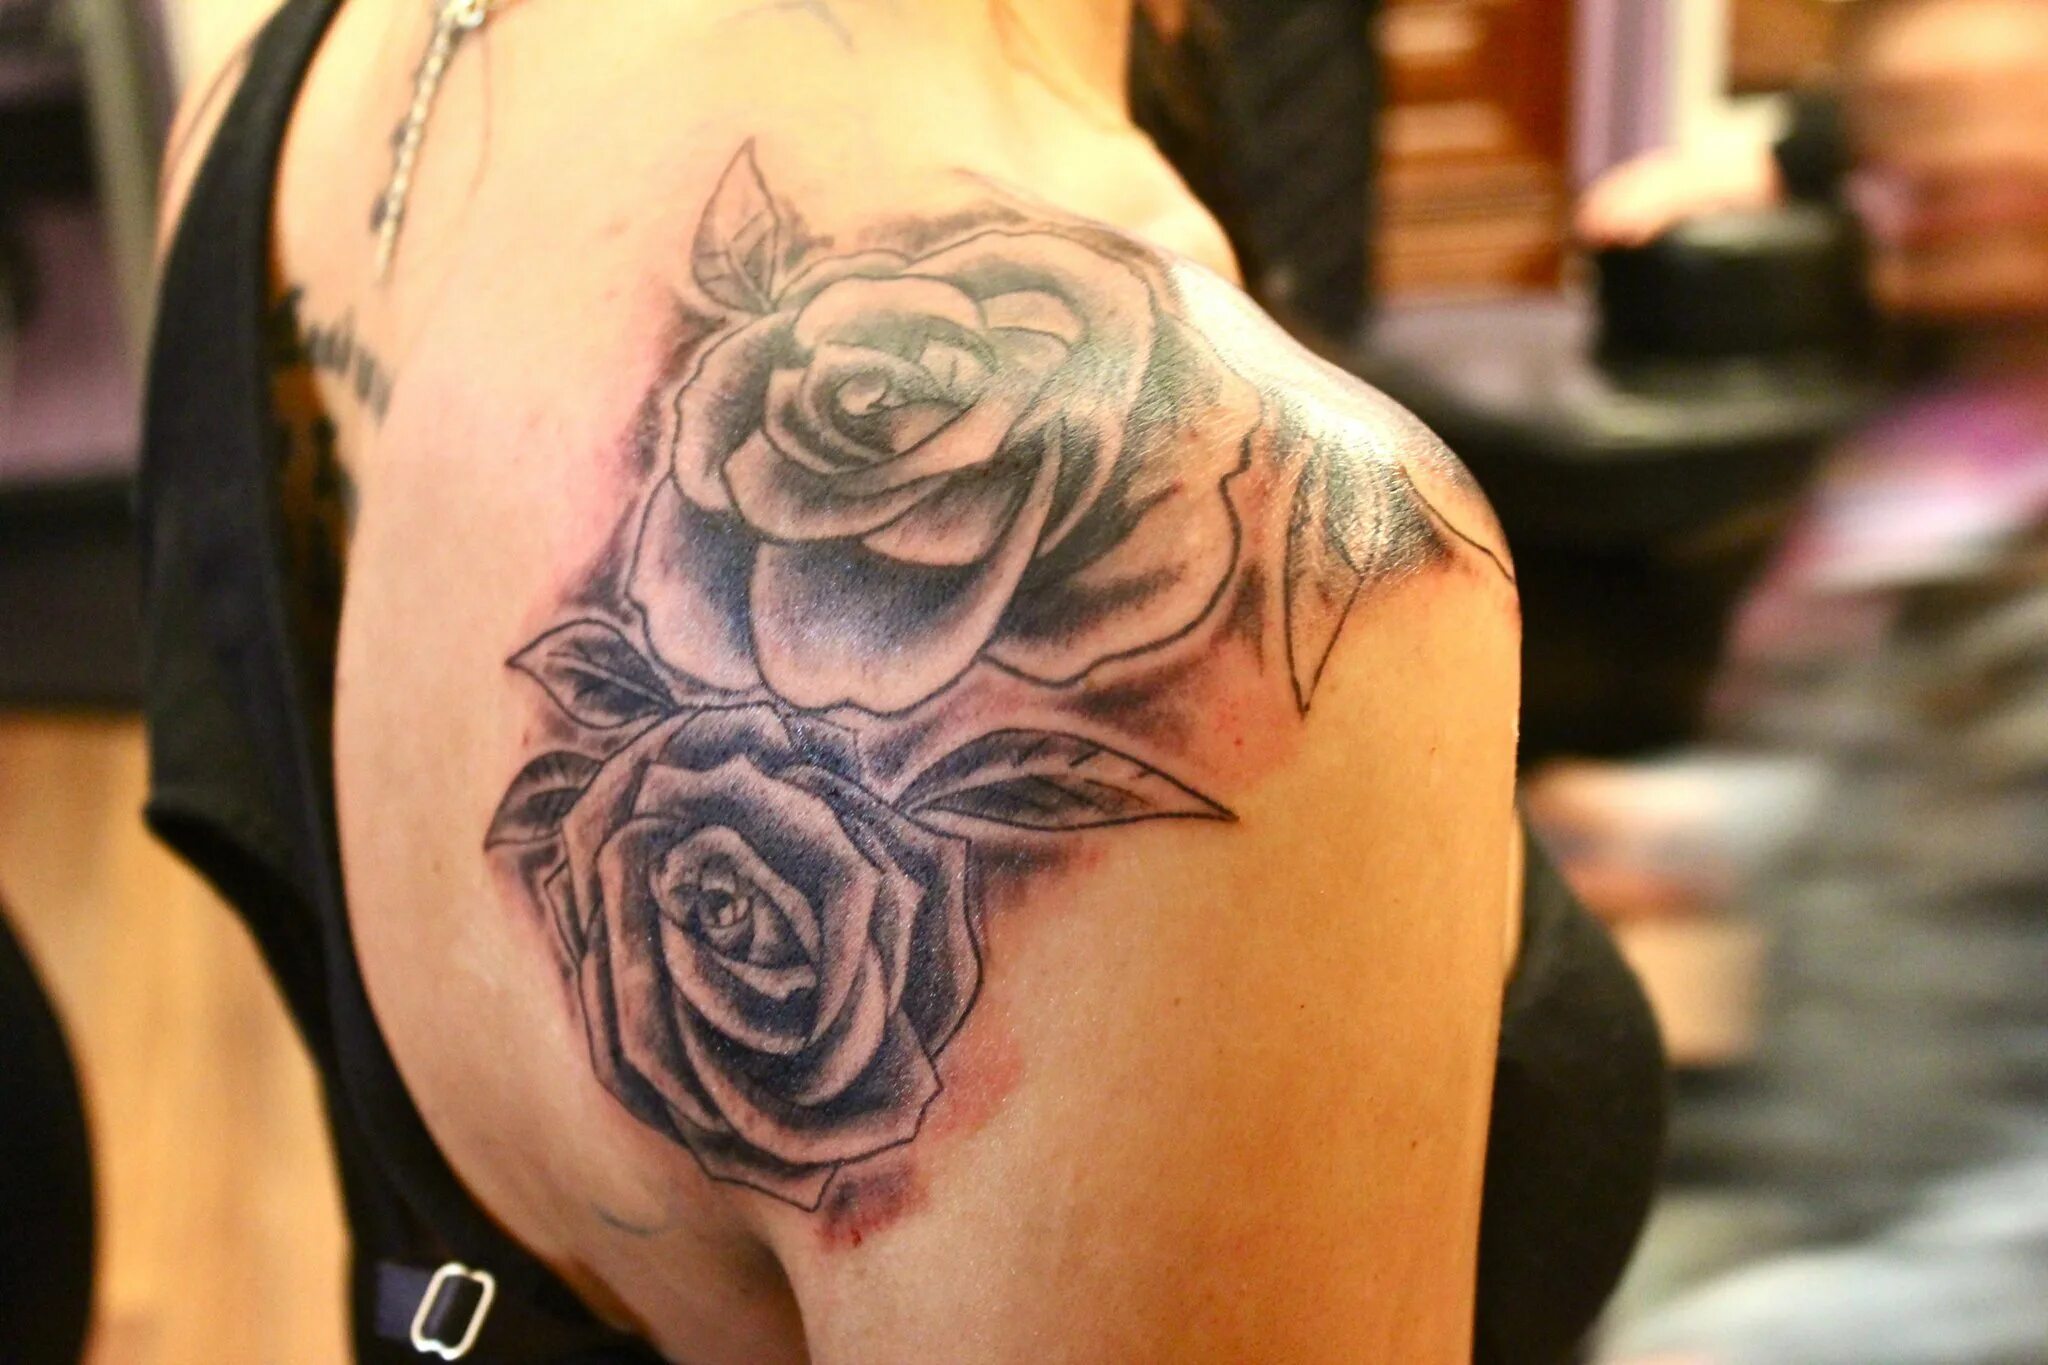 Розочка тату. Татуировка в виде розы. Тату розы на плече.